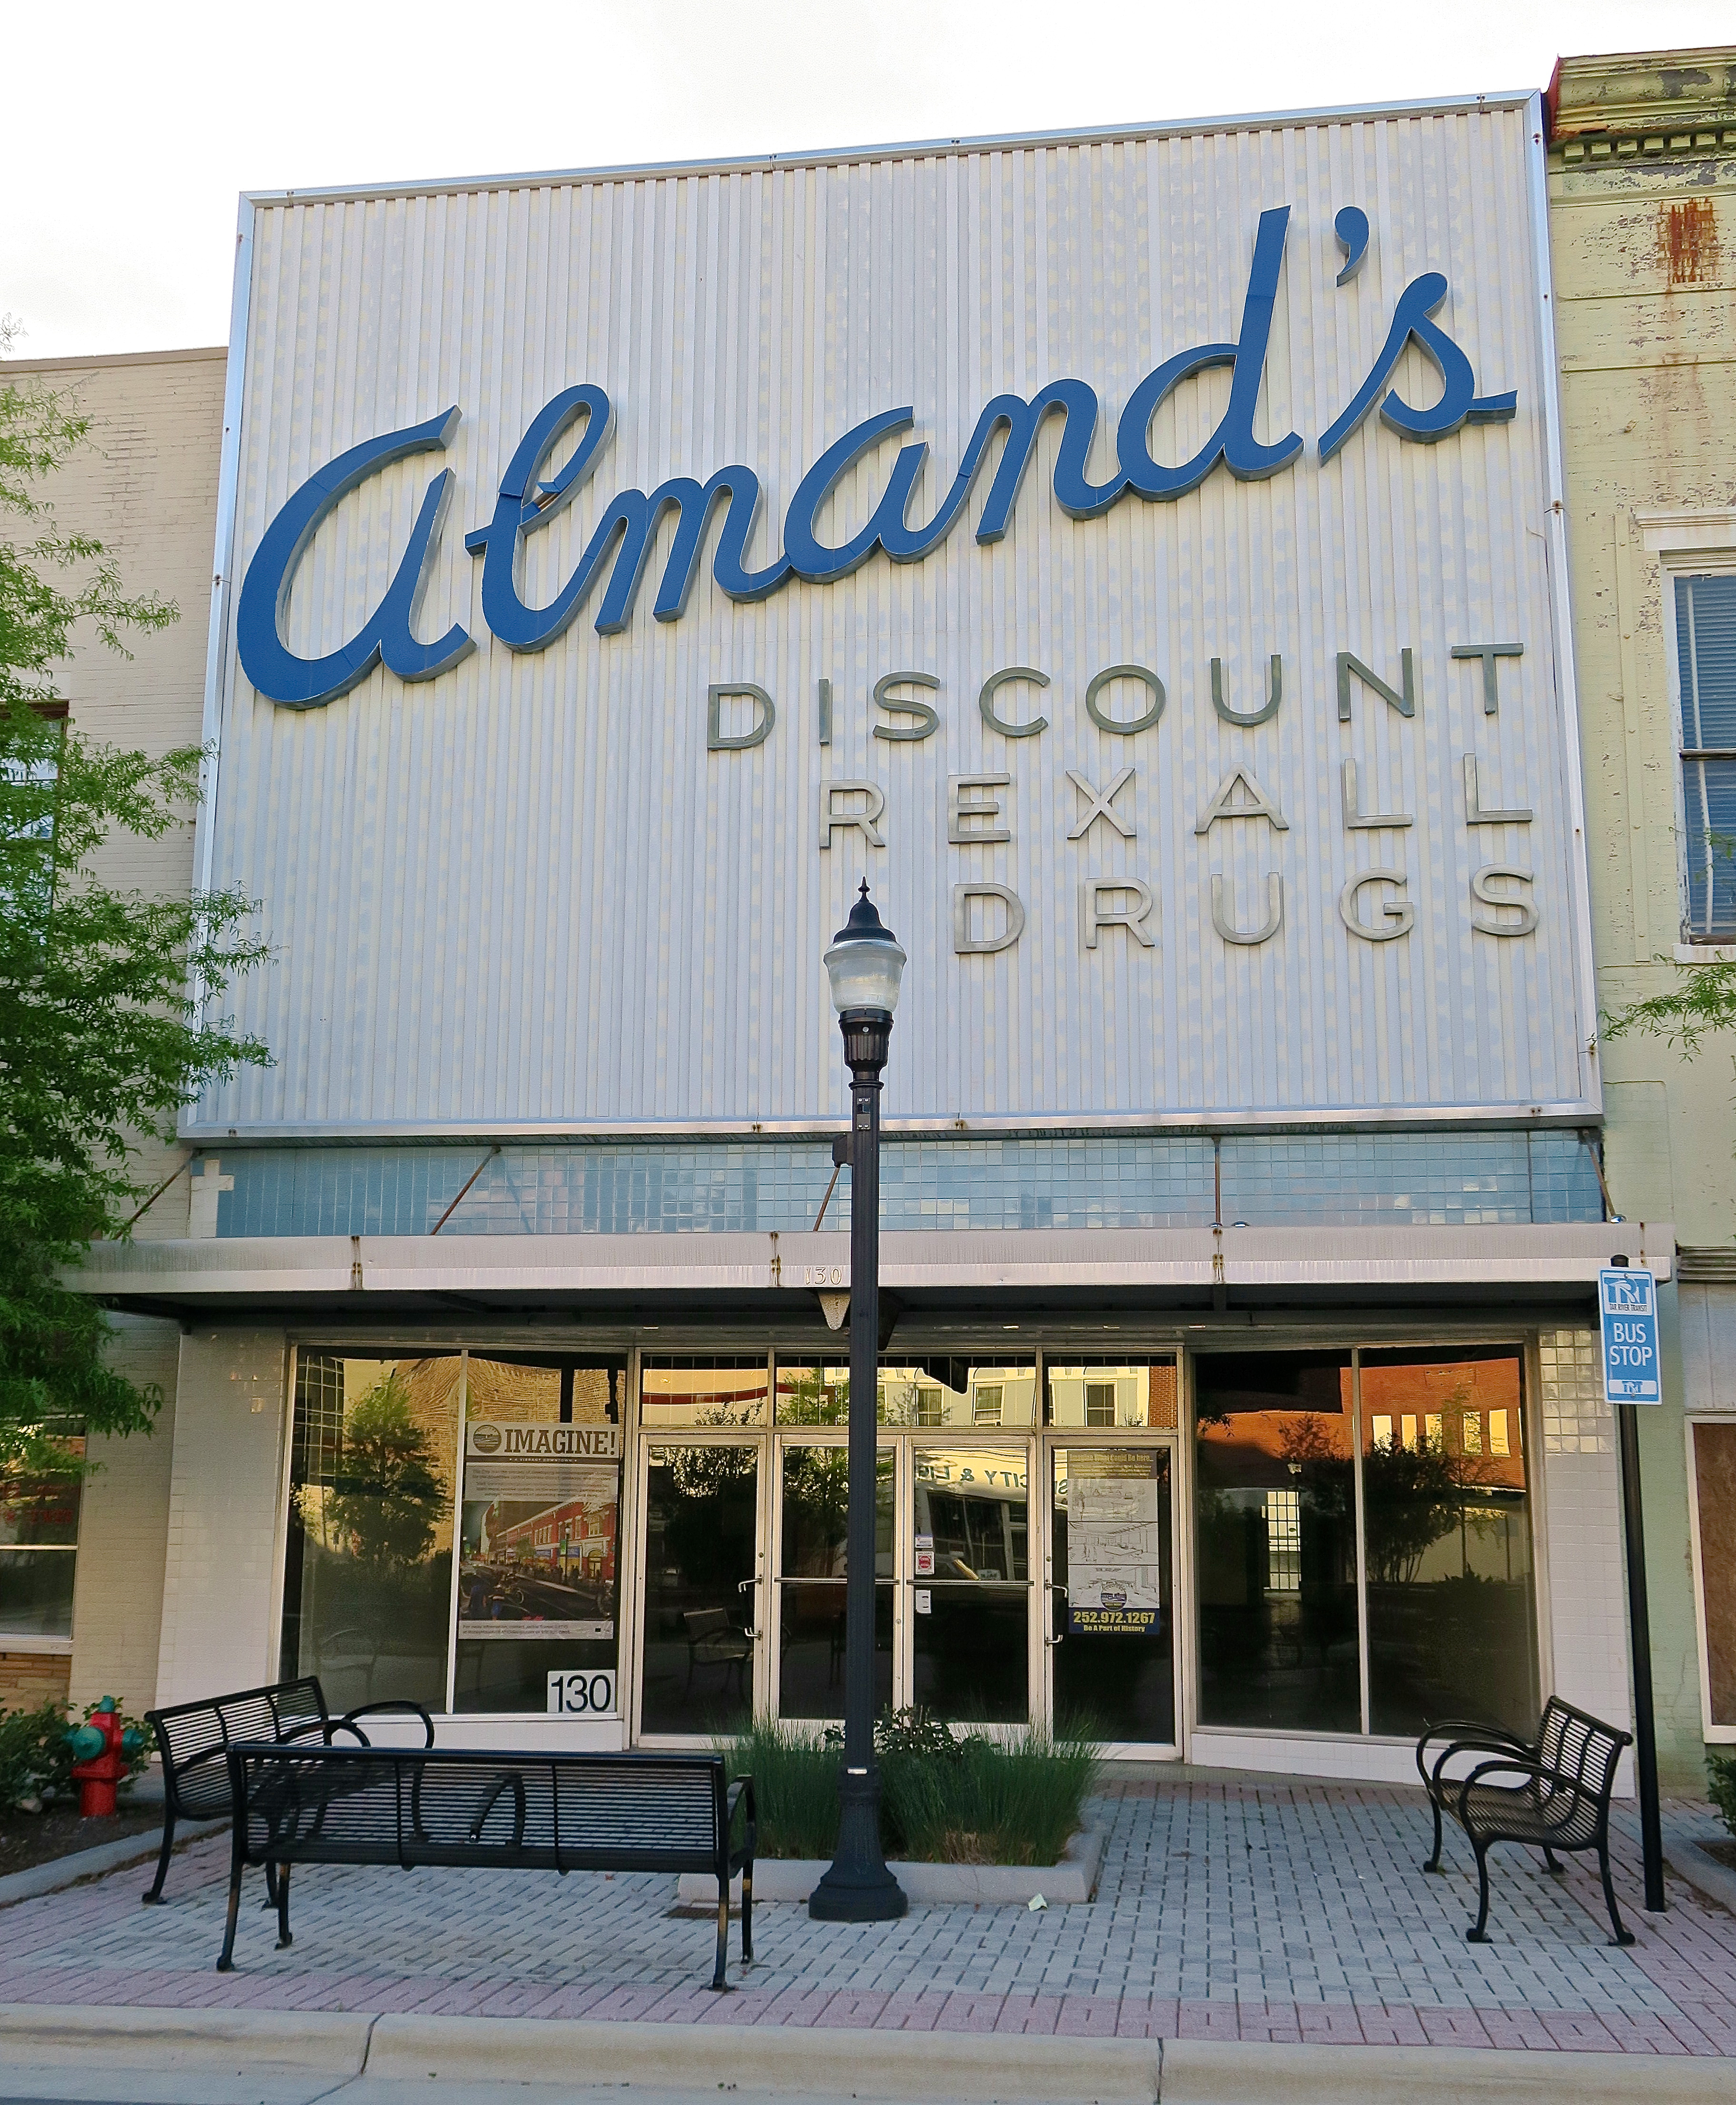 Almand's Discount Rexall Drugs - Rocky Mount, North Carolina U.S.A. - April 7, 2017